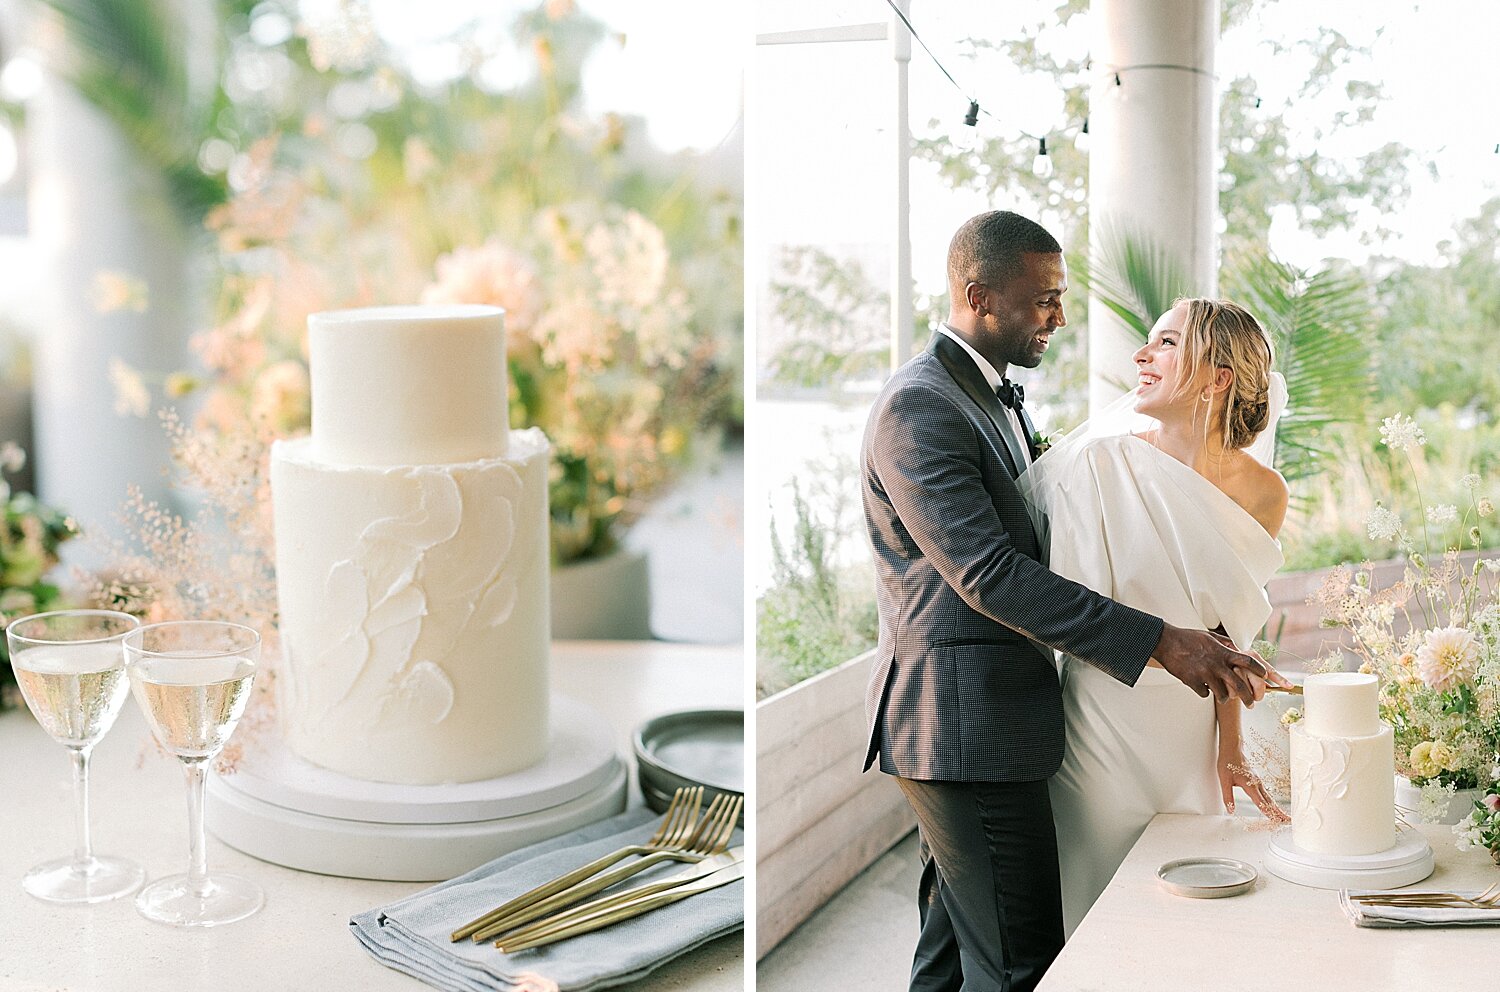 newlyweds cut wedding cake at Celestine | Asher Gardner Photography | Intimate Ceremony in DUMBO New York